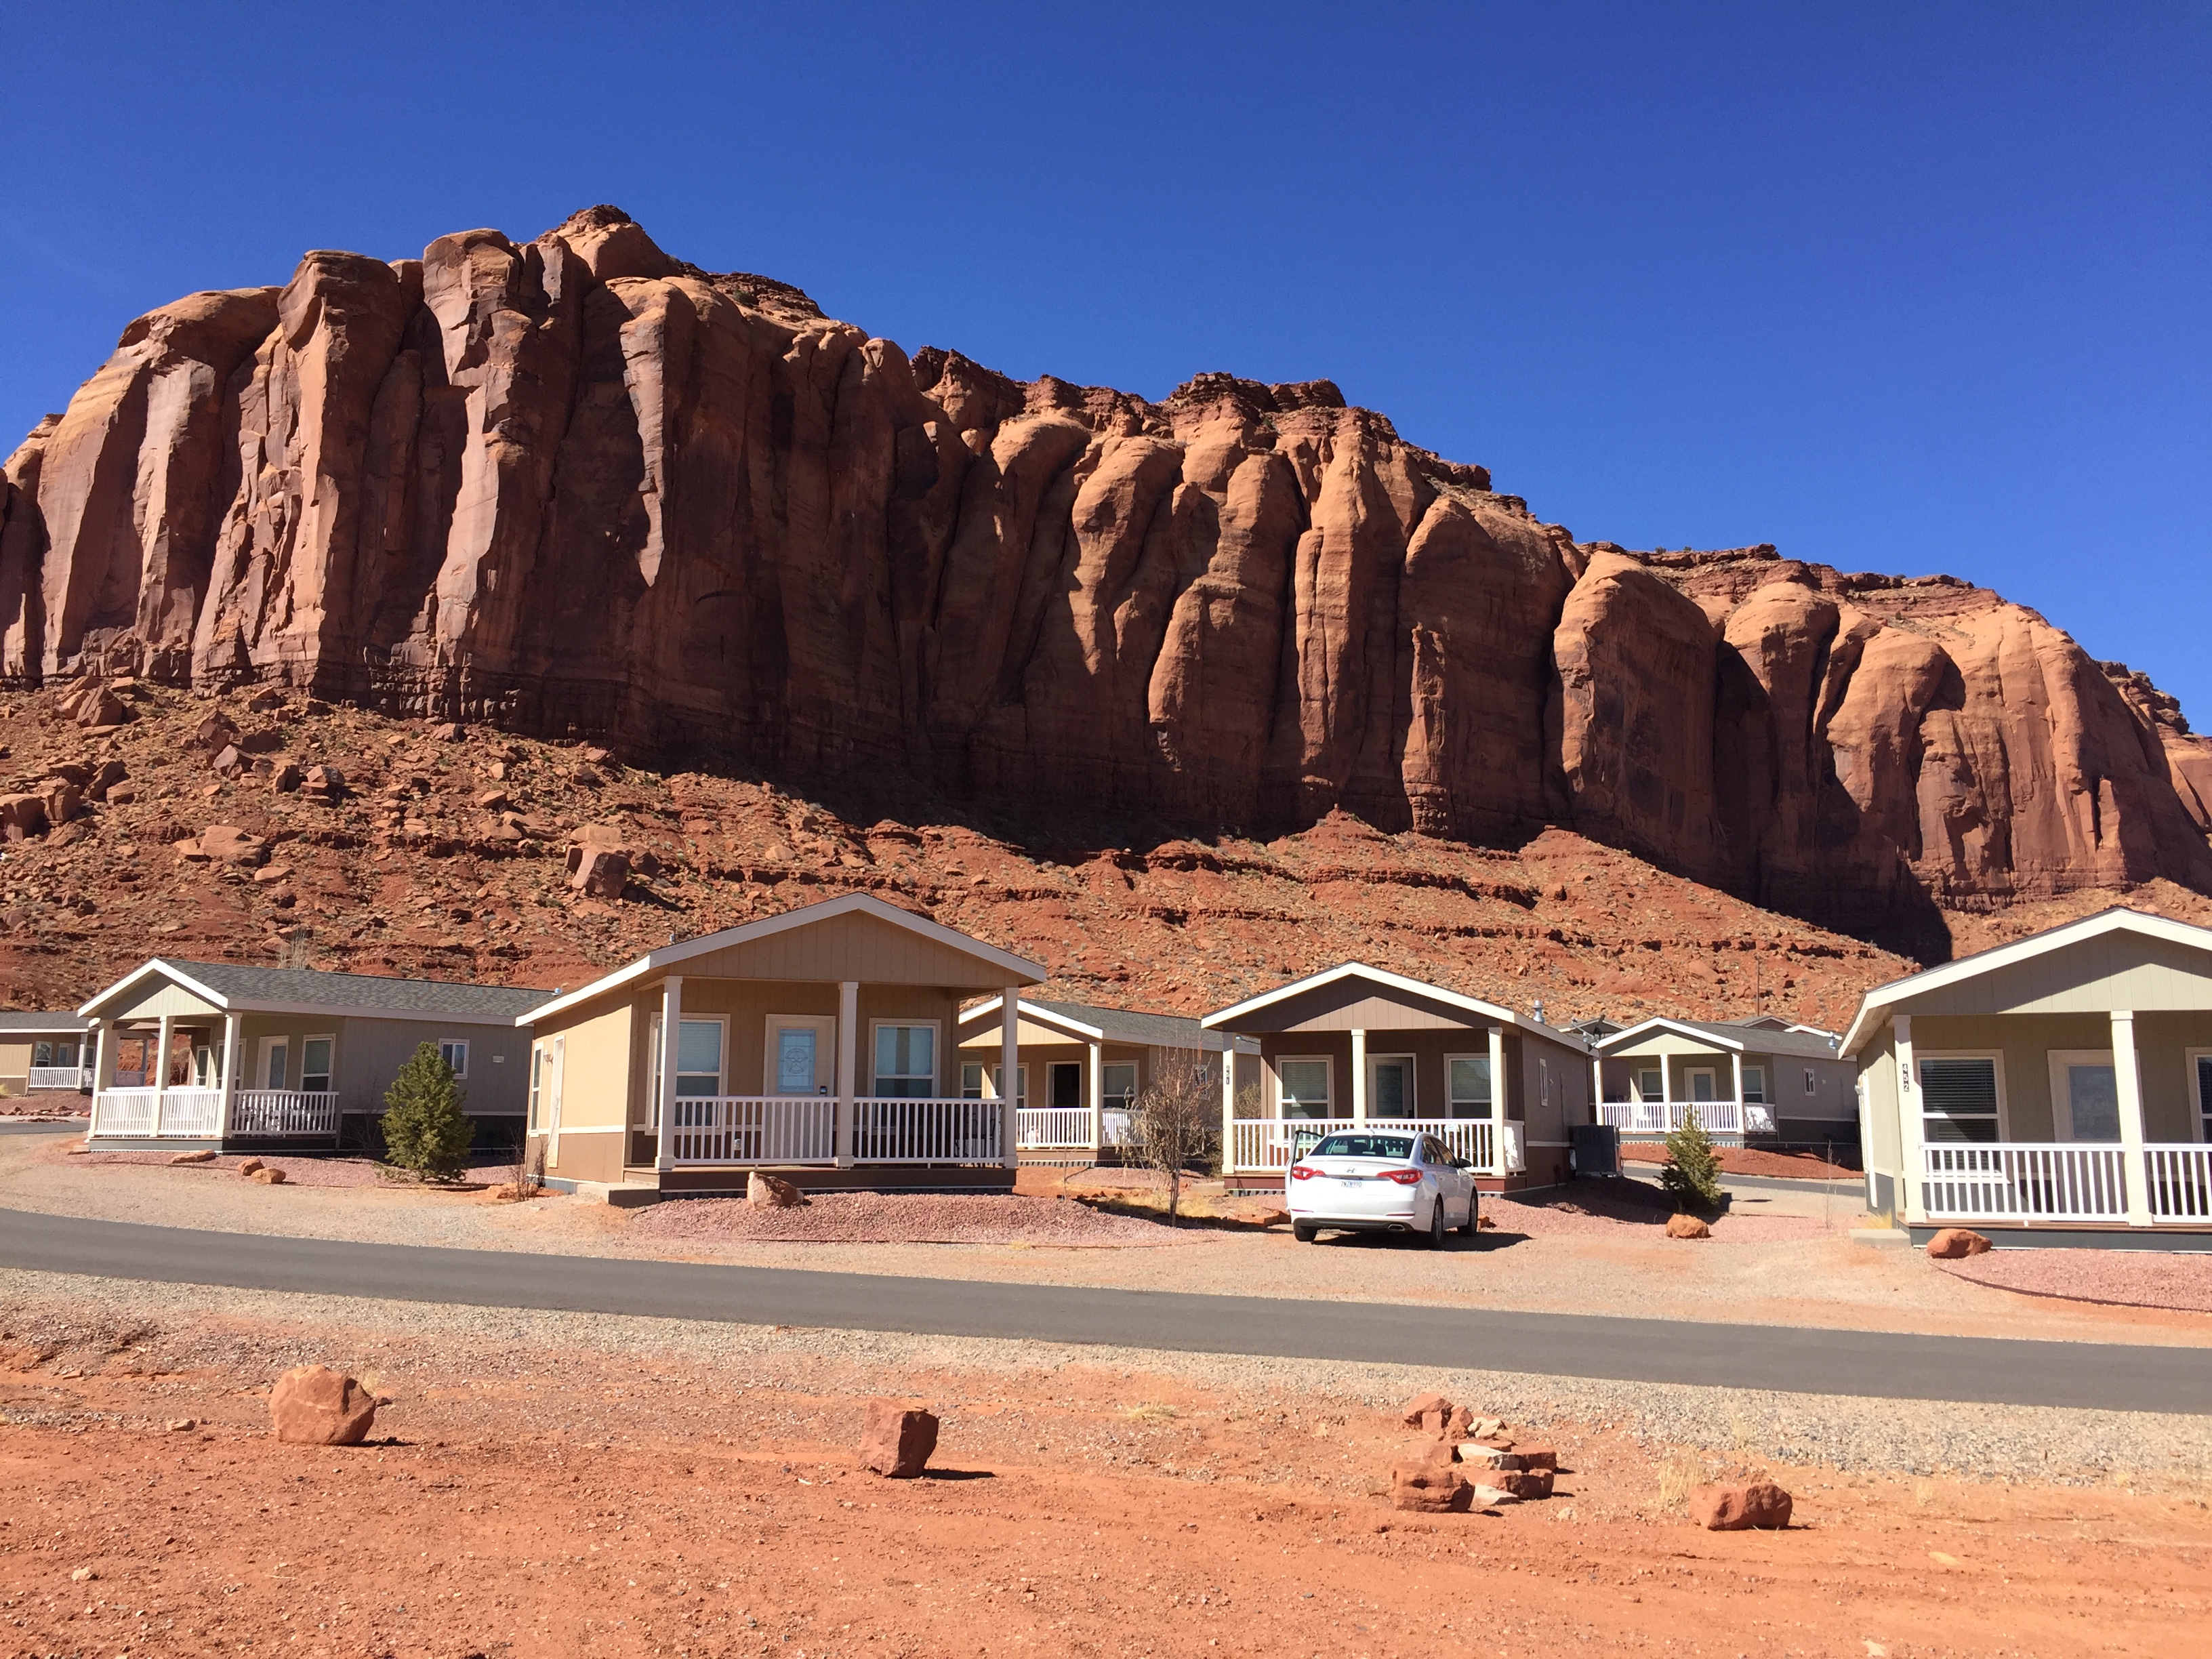 Goulding's Lodge - Nuestro hotel en Monument Valley | LaNaranjaViajera